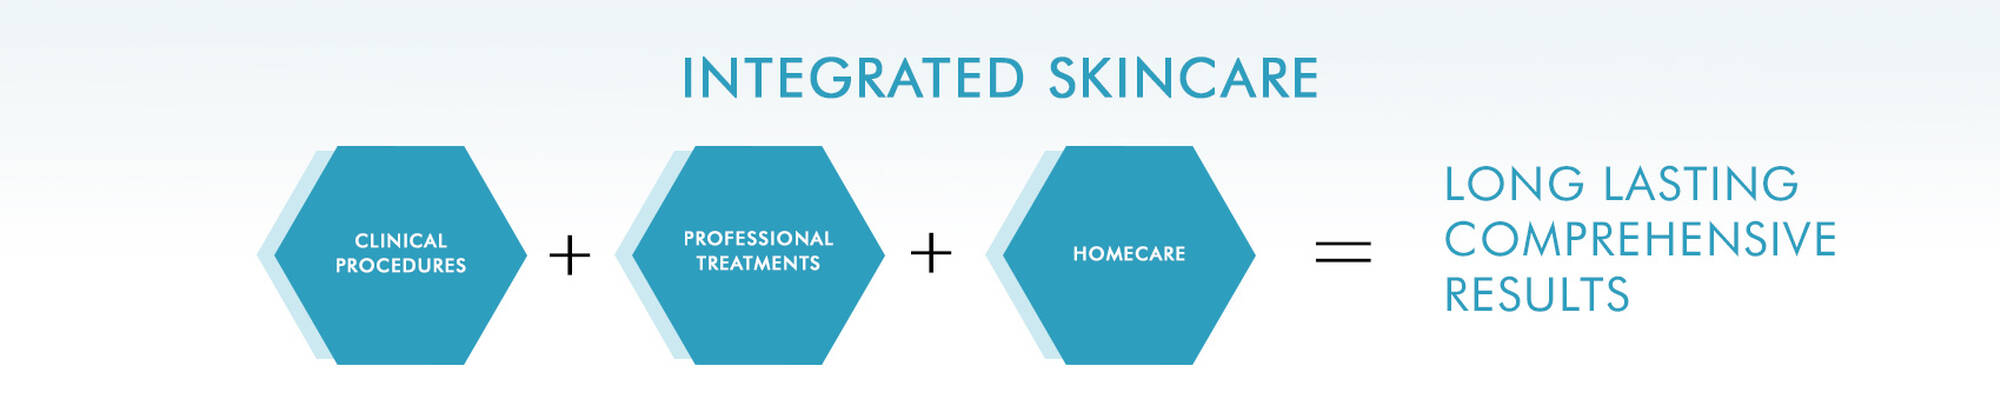 Integrated Skincare Diagram